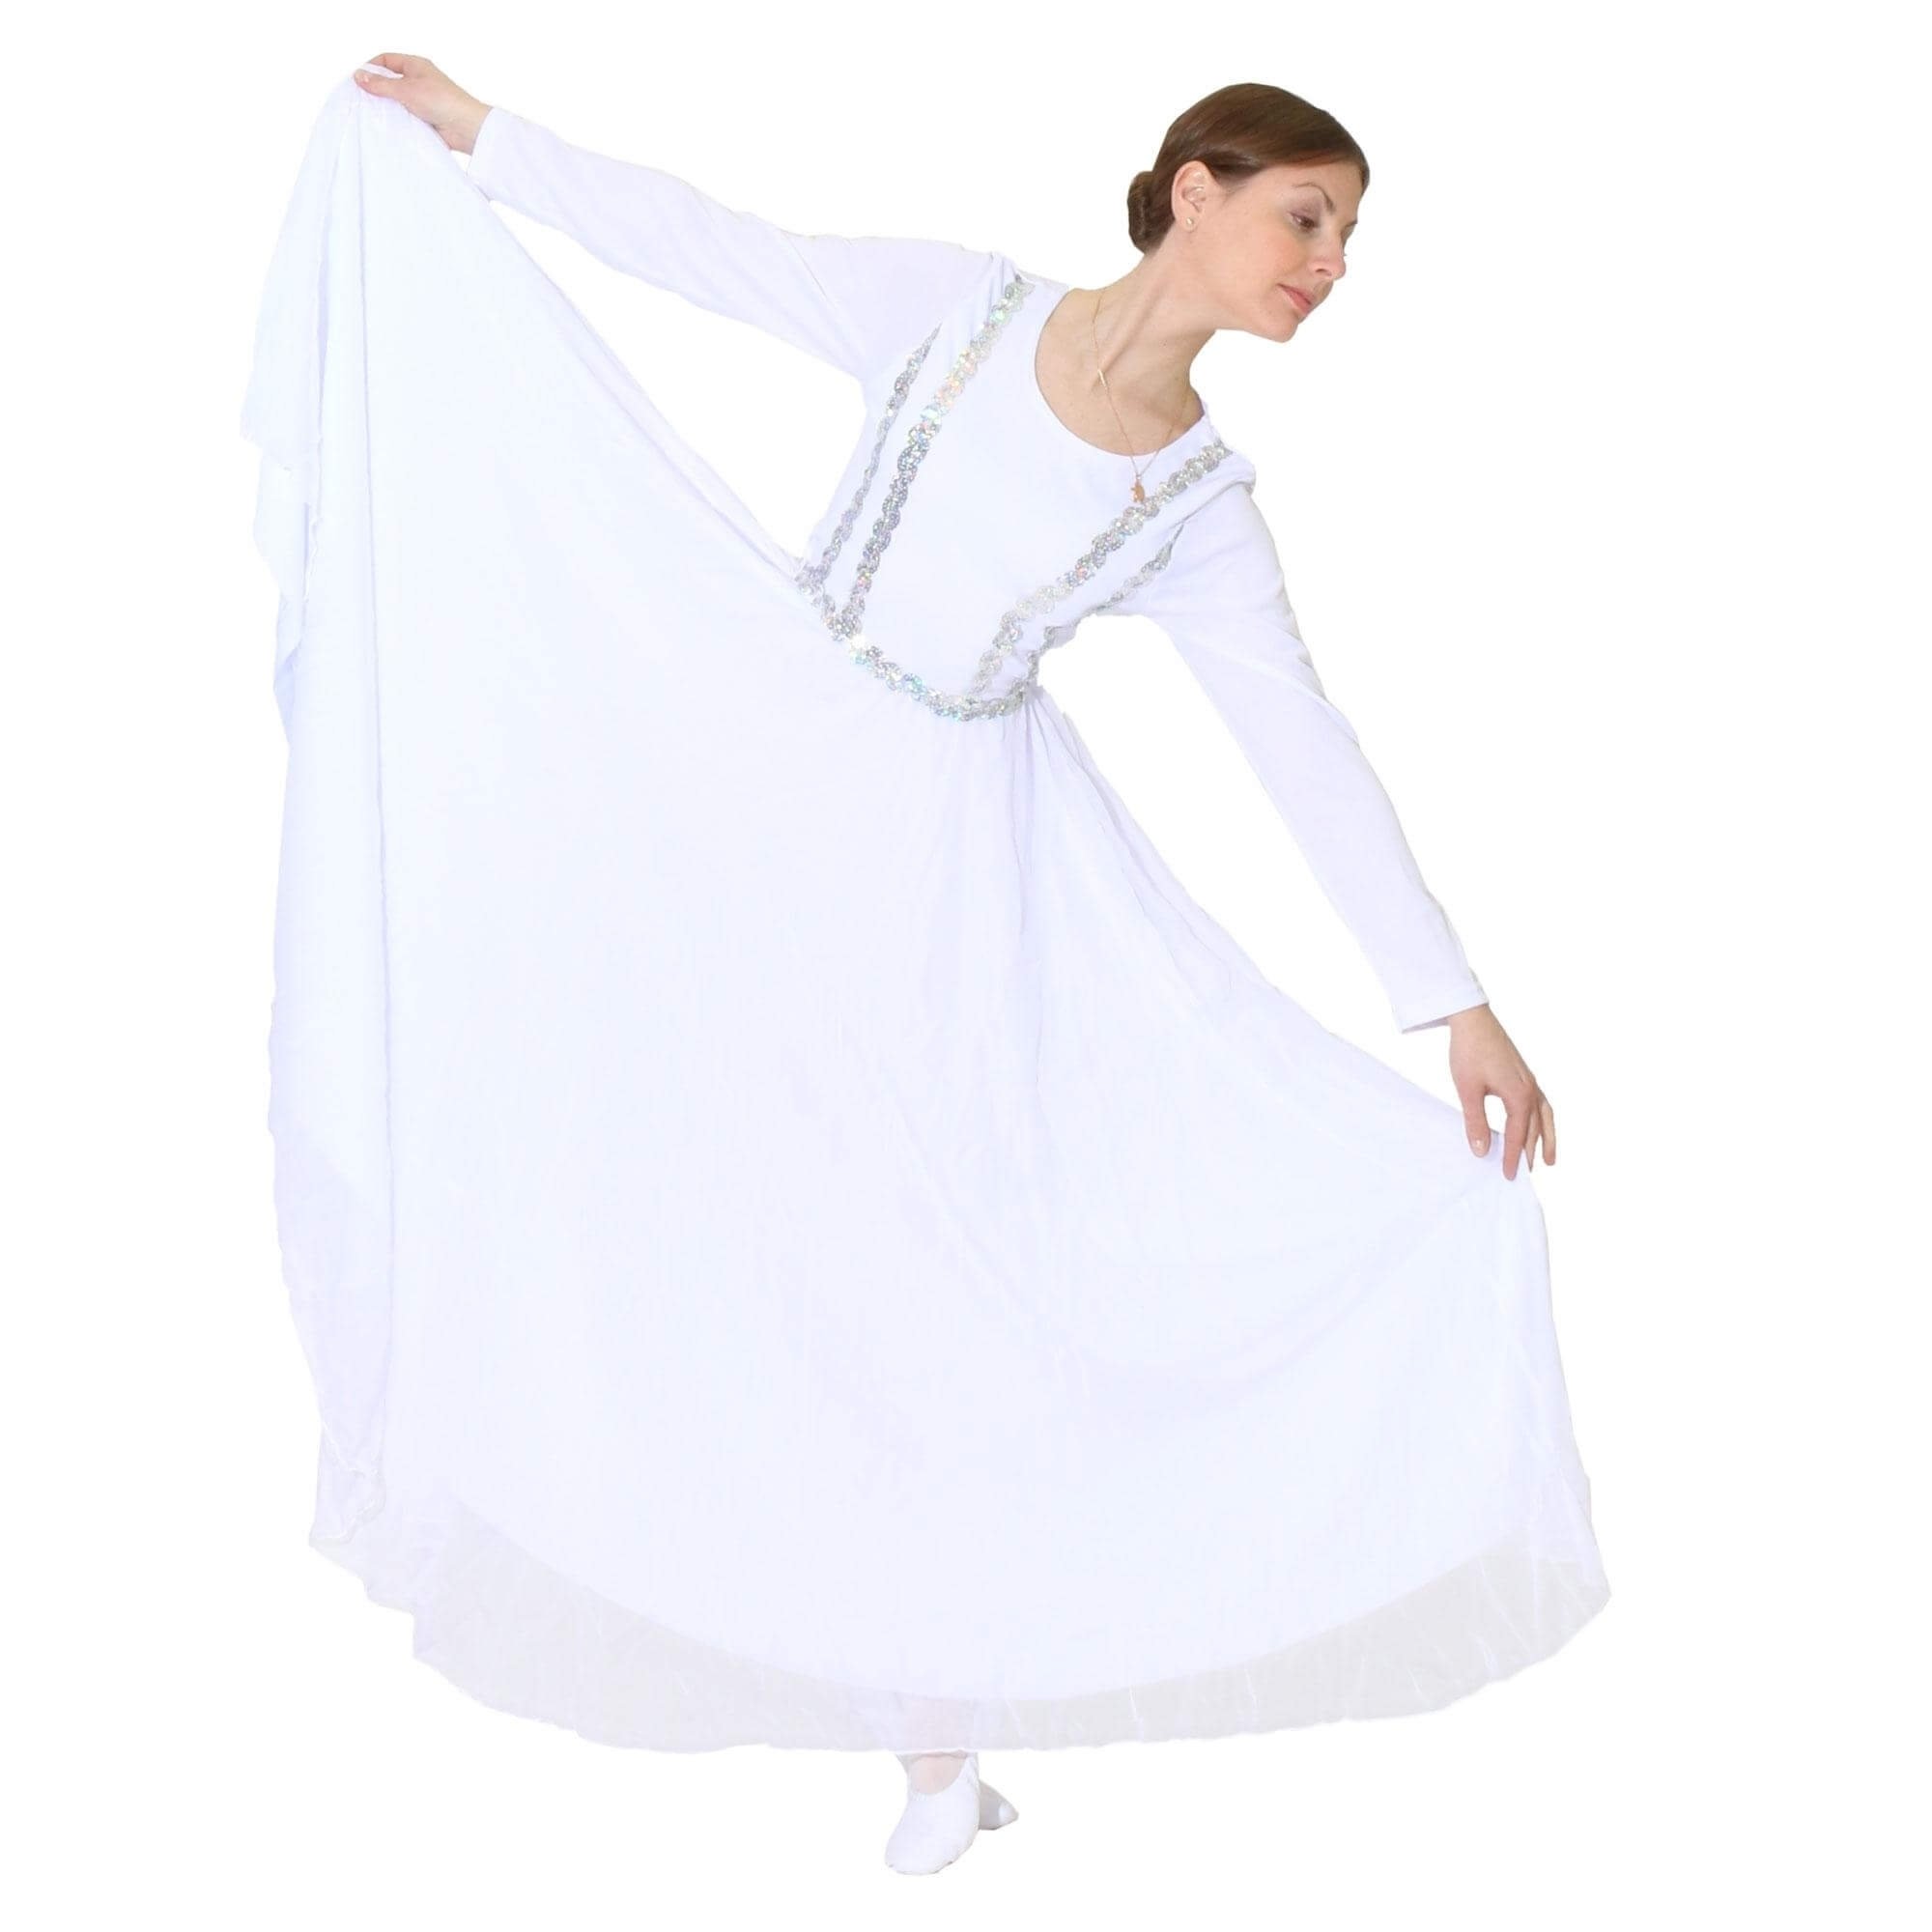 Danzcue Full Length Vivid Chiffon Praise Dance Dress - Click Image to Close